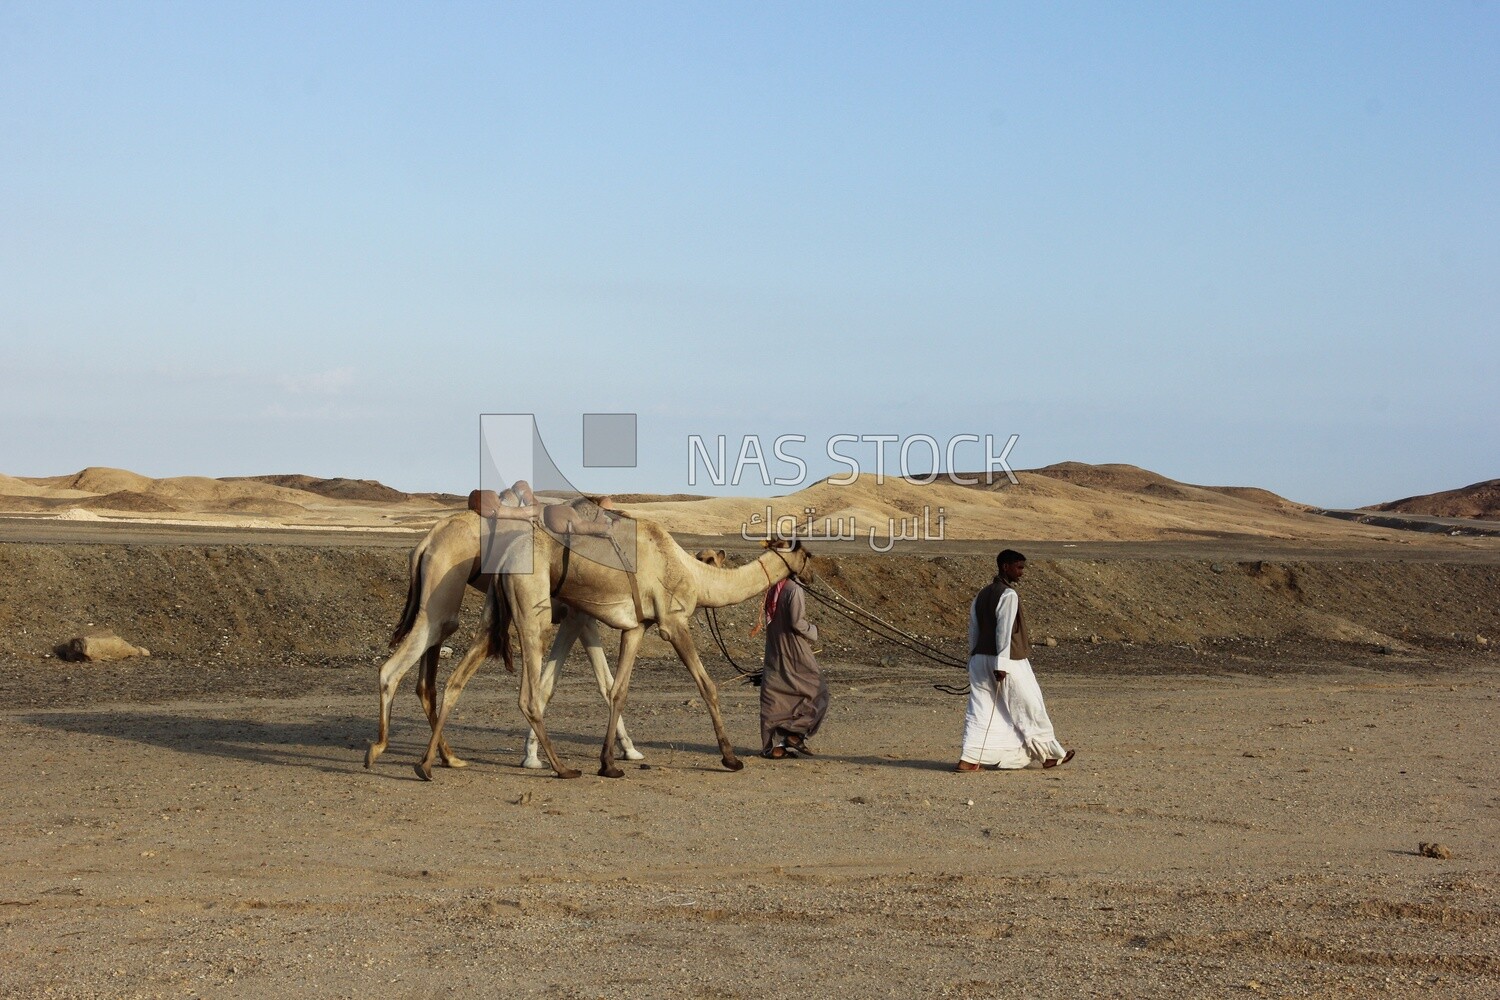 Two Bedouin men walking with camels in the desert